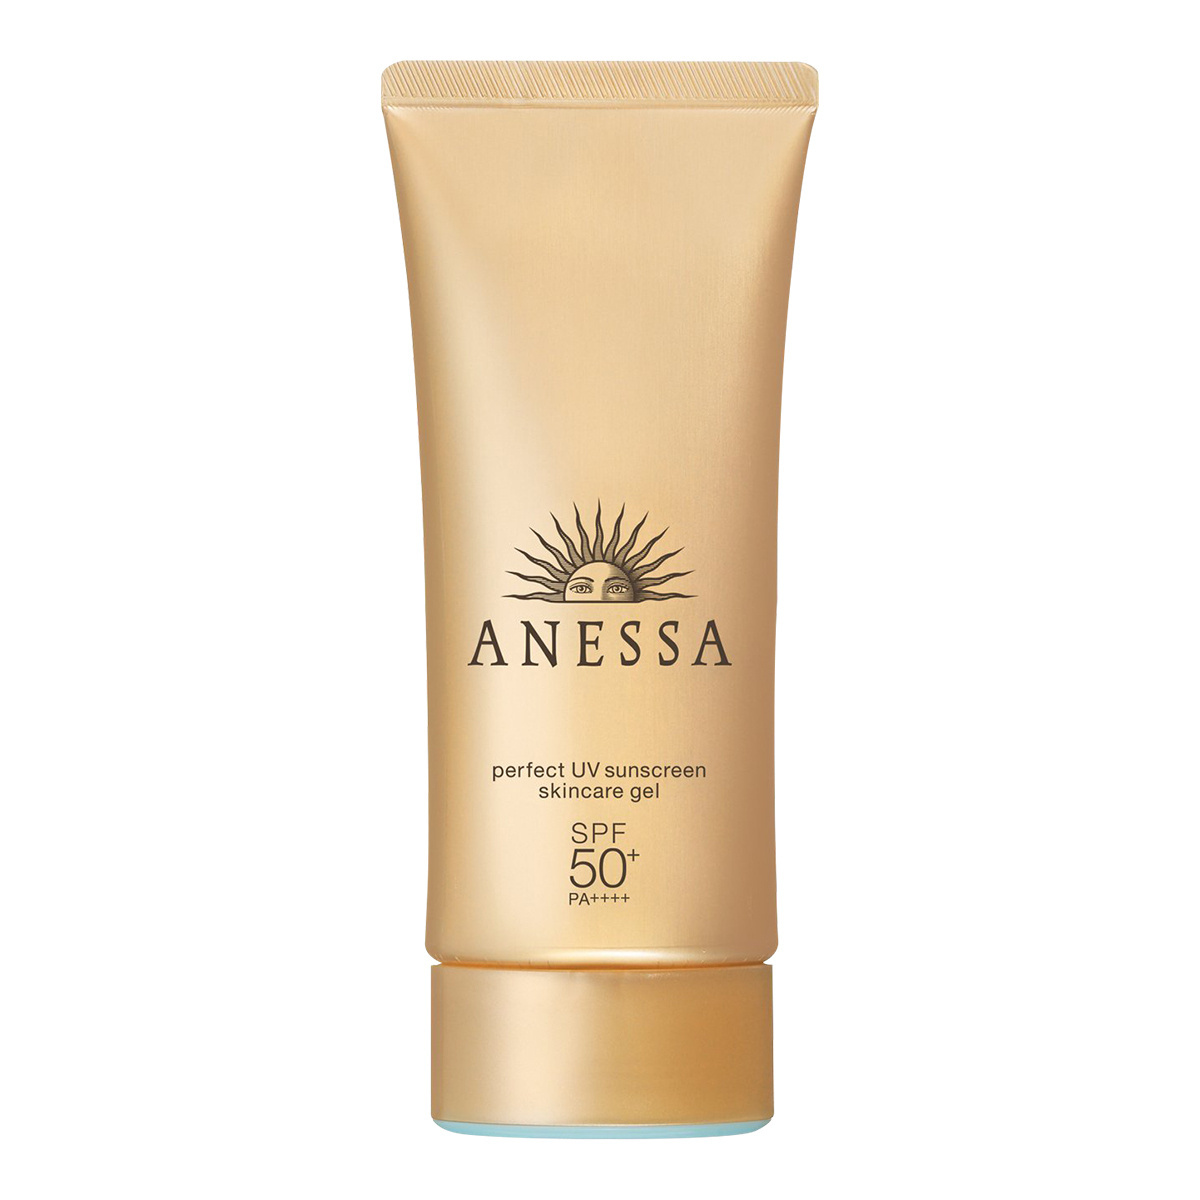 SHISEIDO New Anessa Perfect UV Sunscreen Skin Care Gel SPF 50 PA